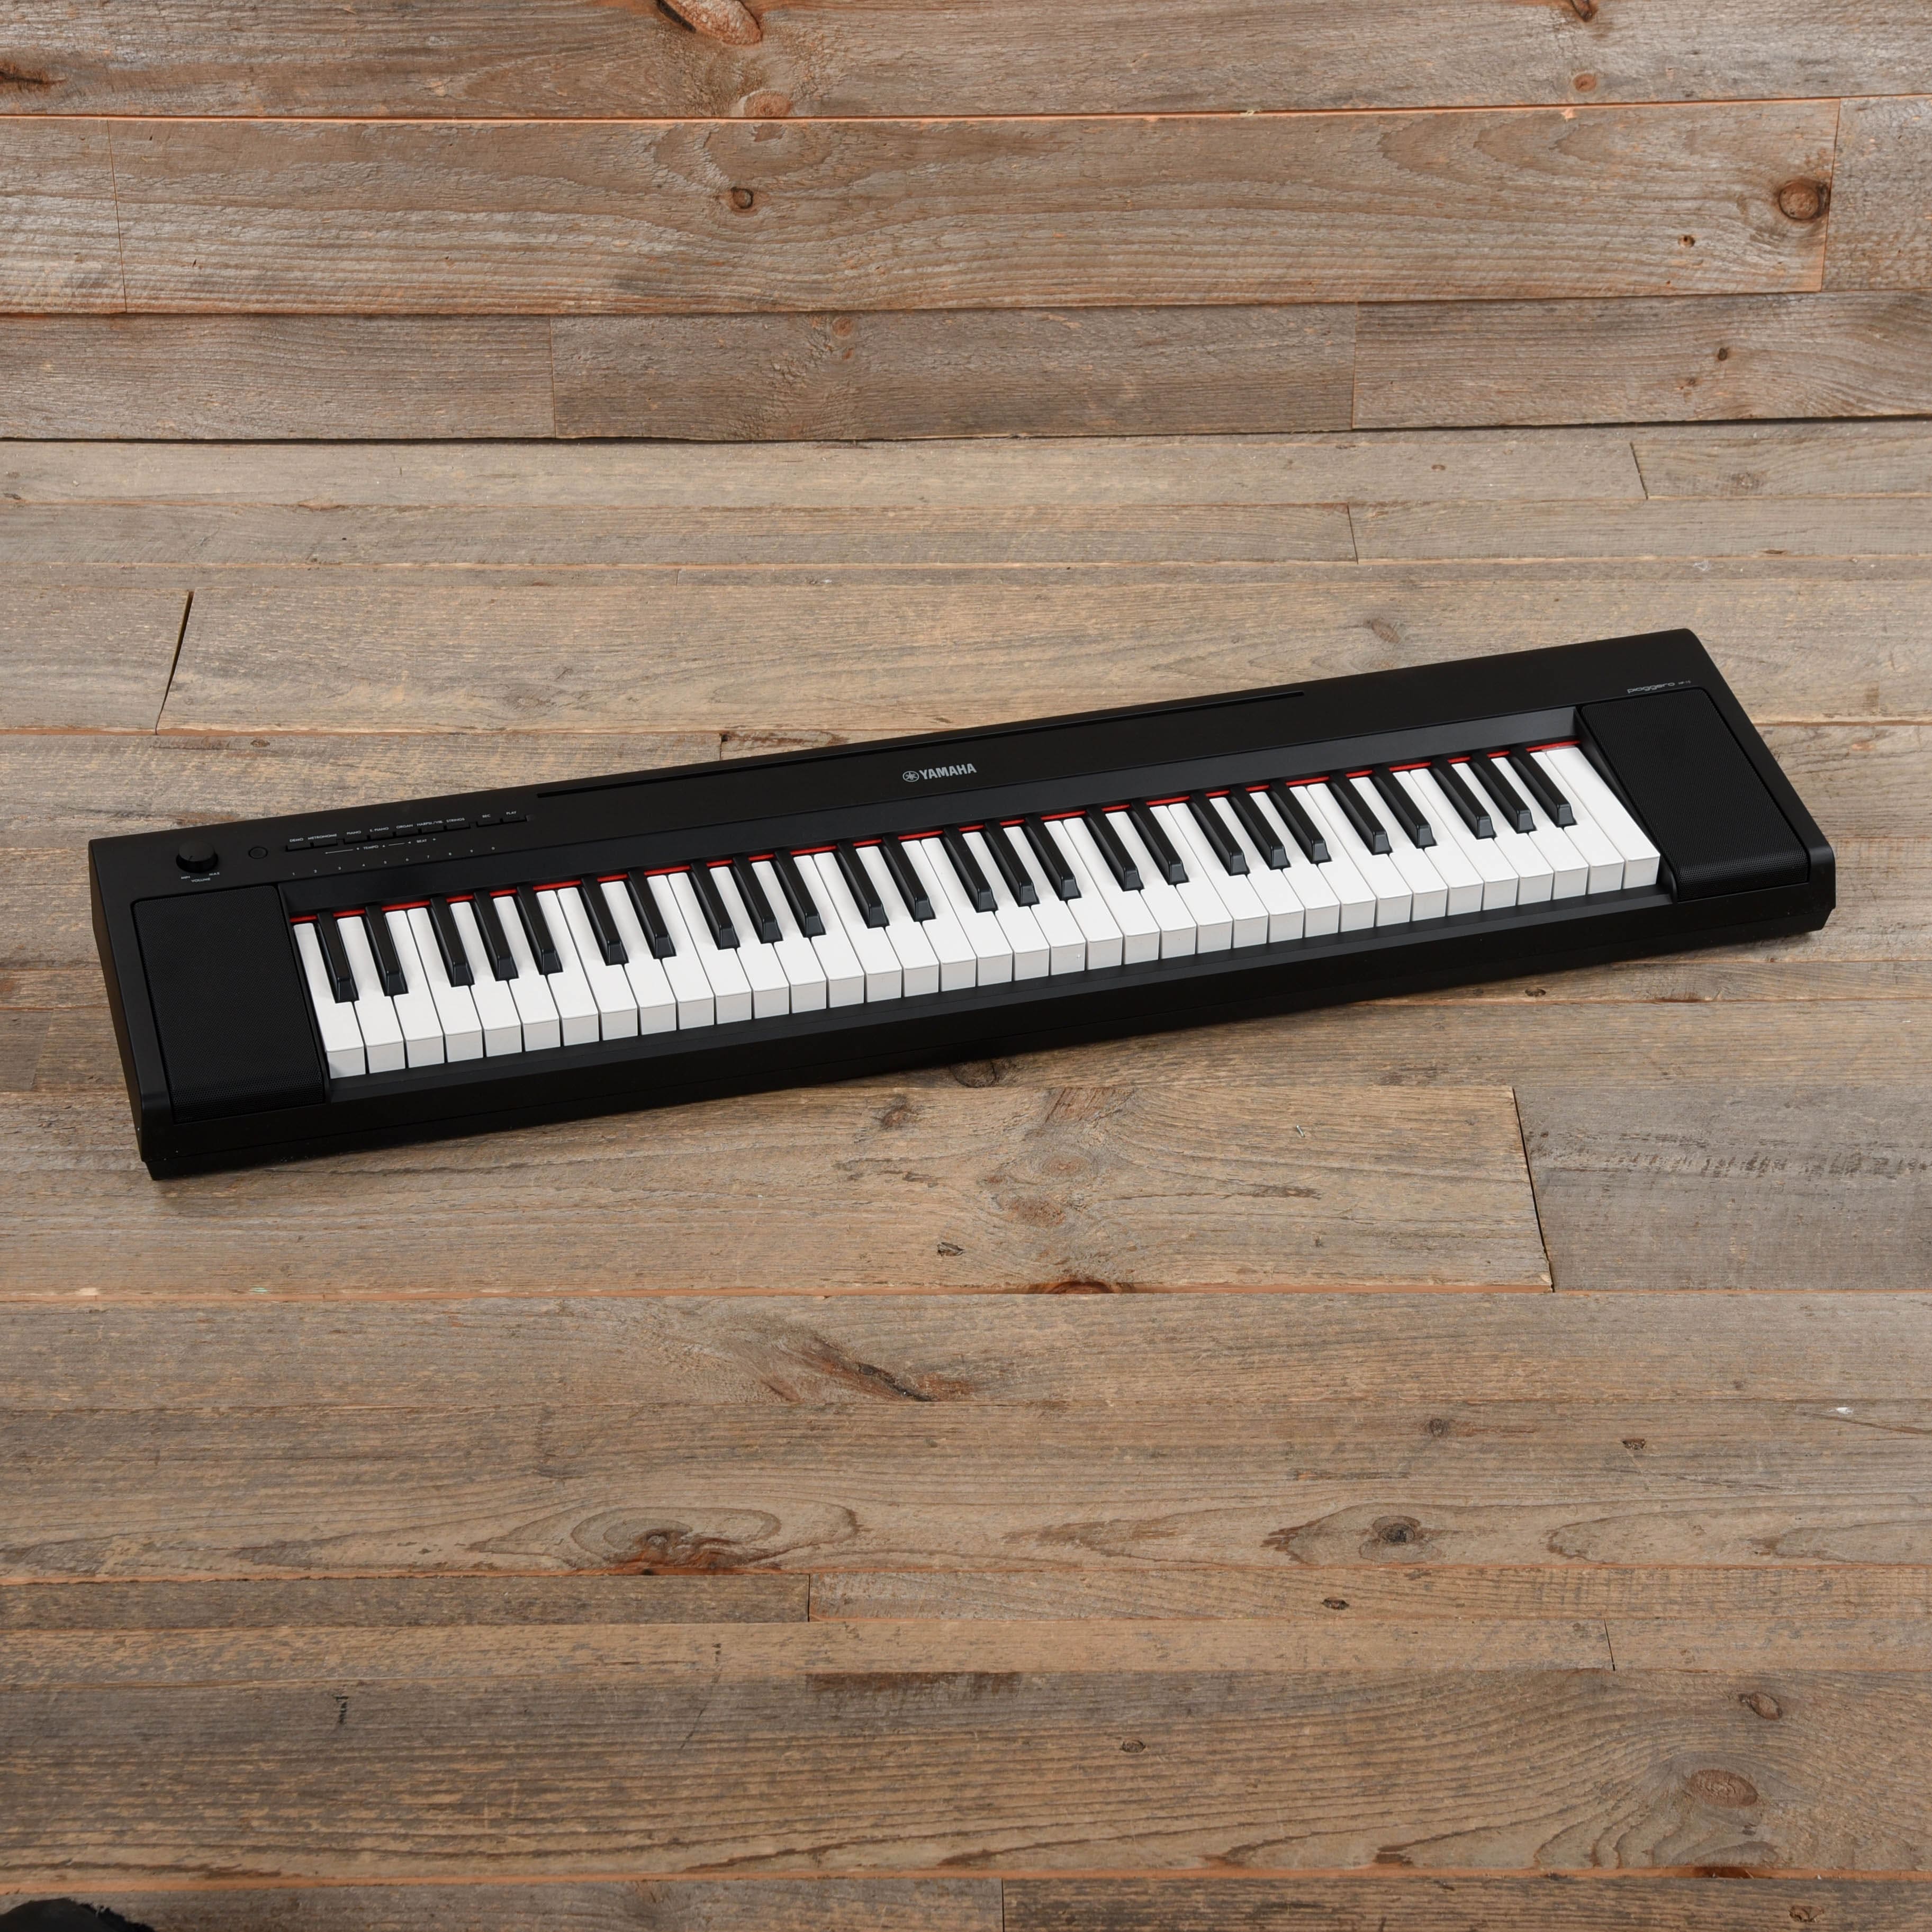 Yamaha Piaggero NP-15 61-key Ultra Portable Digital Piano Black Keyboards and Synths / Electric Pianos